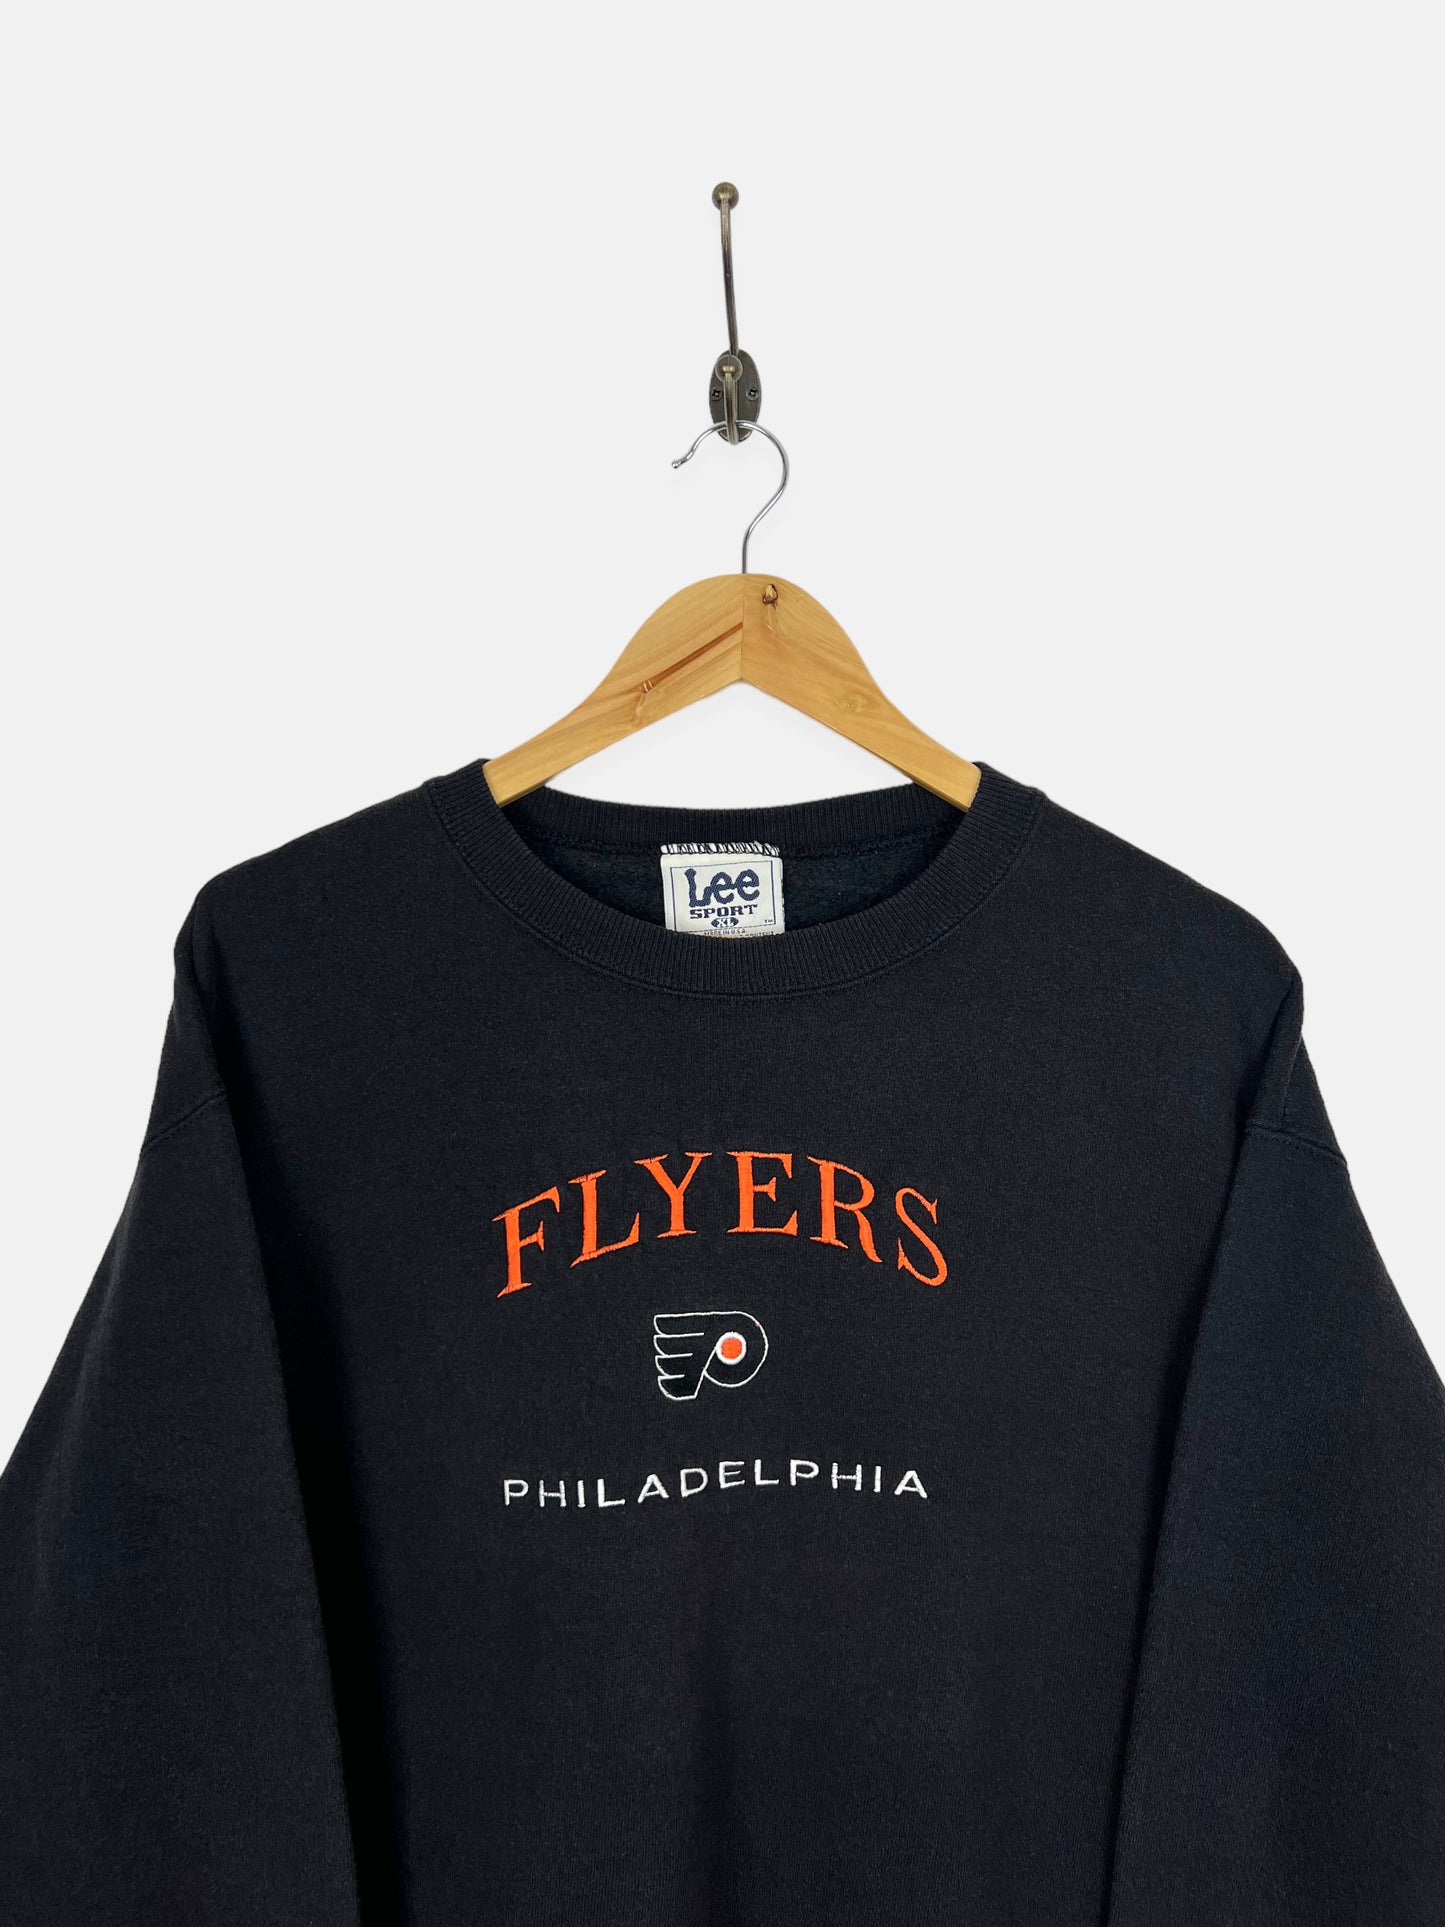 90's Philadelphia Flyers NHL USA Made Embroidered Vintage Sweatshirt Size M-L